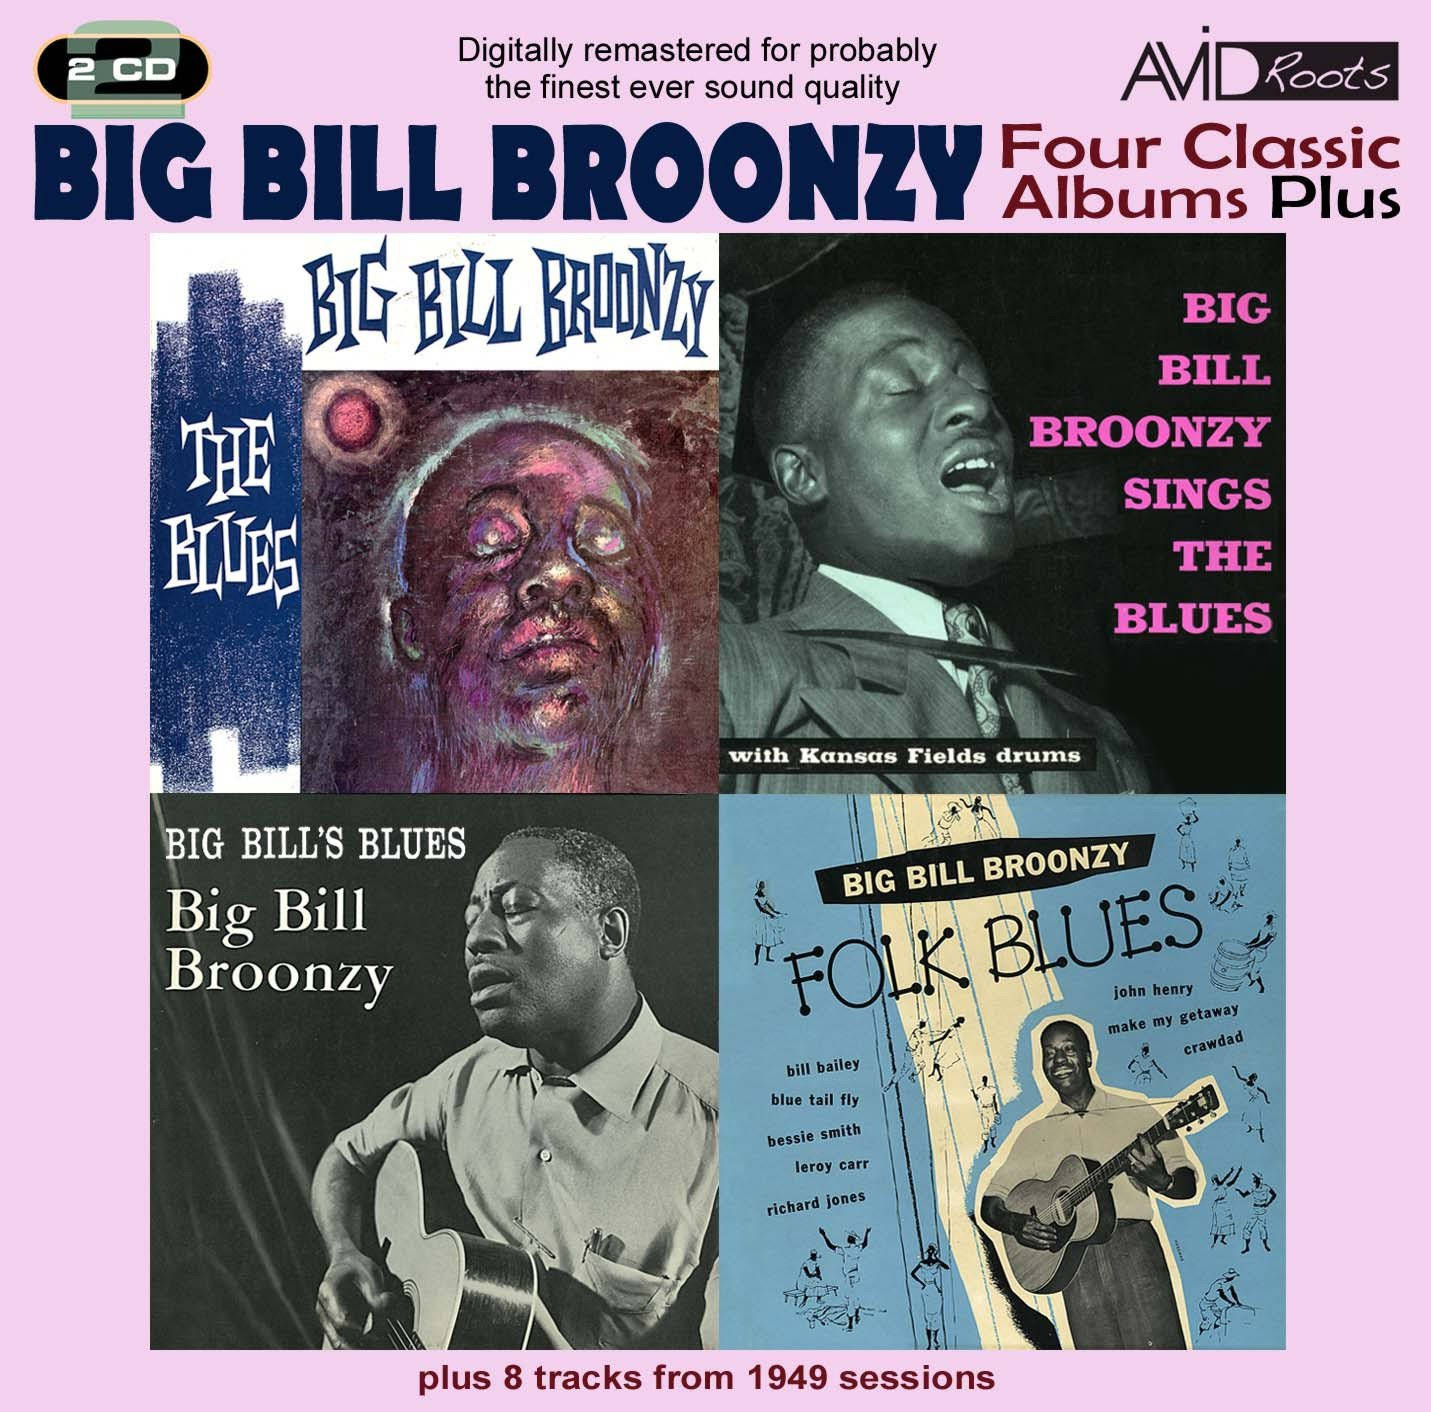 Big Bill Broonzy Four Classic Album Plus Wallpaper